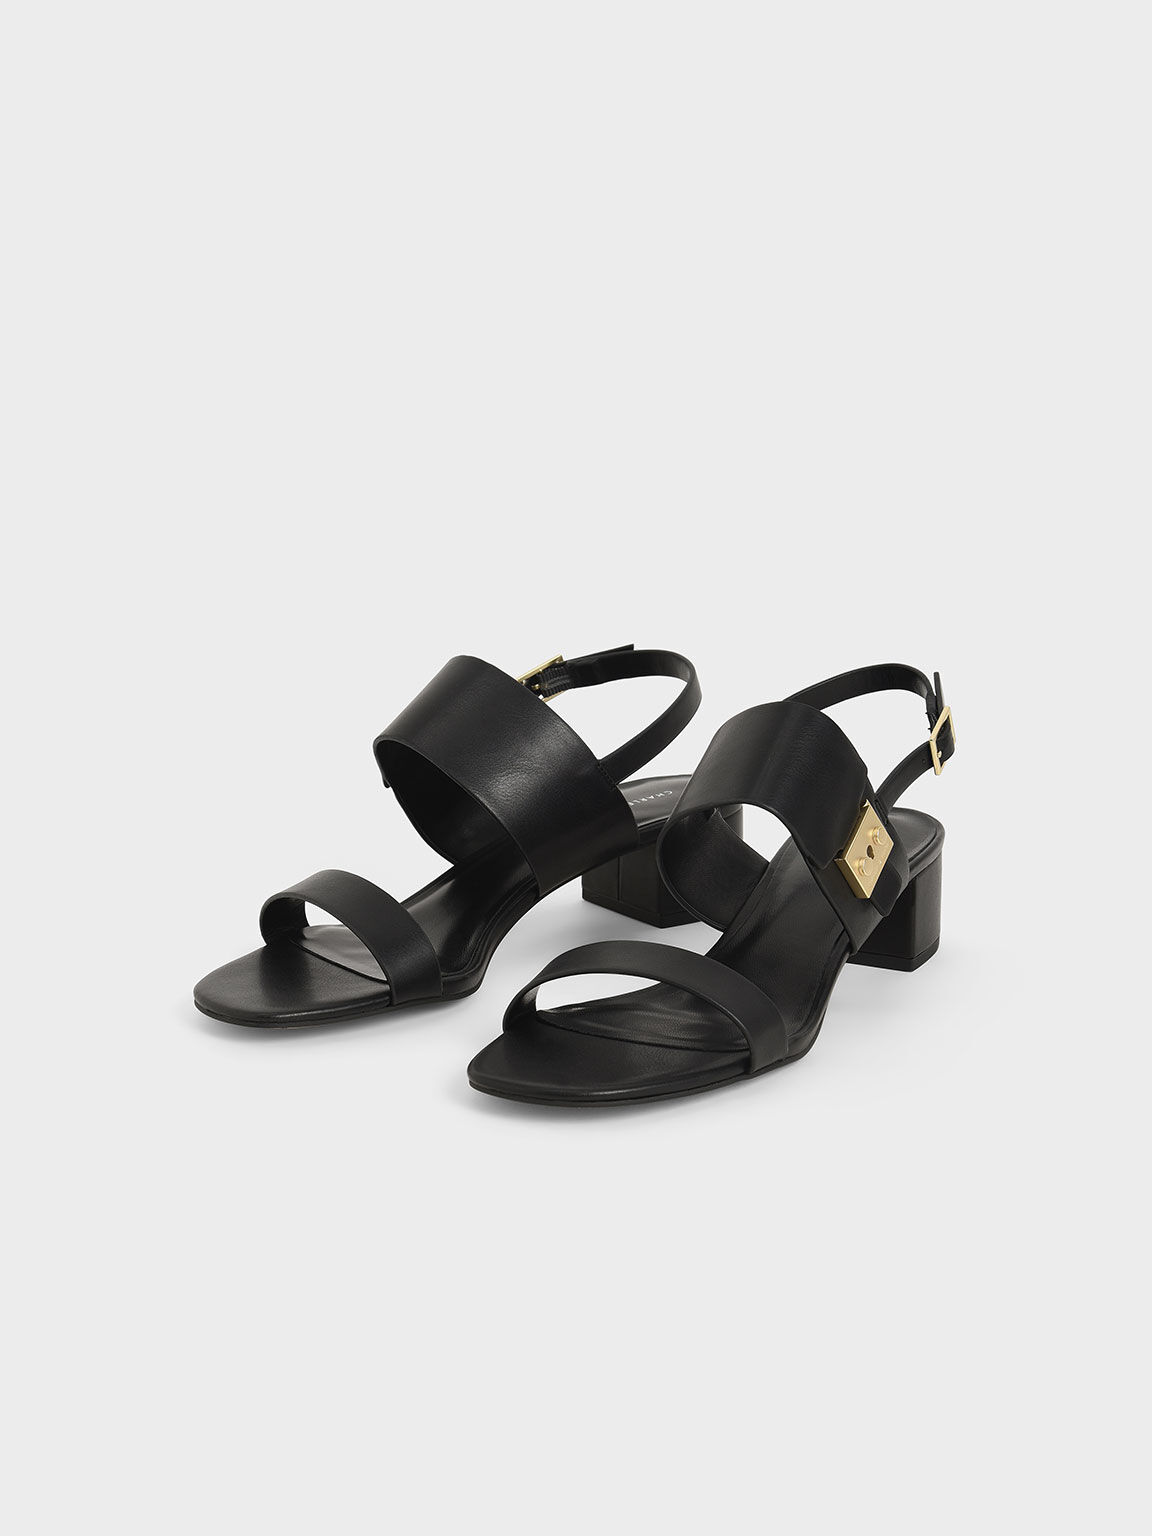 Calvin Klein Jacquard Leather Sandals - Farfetch